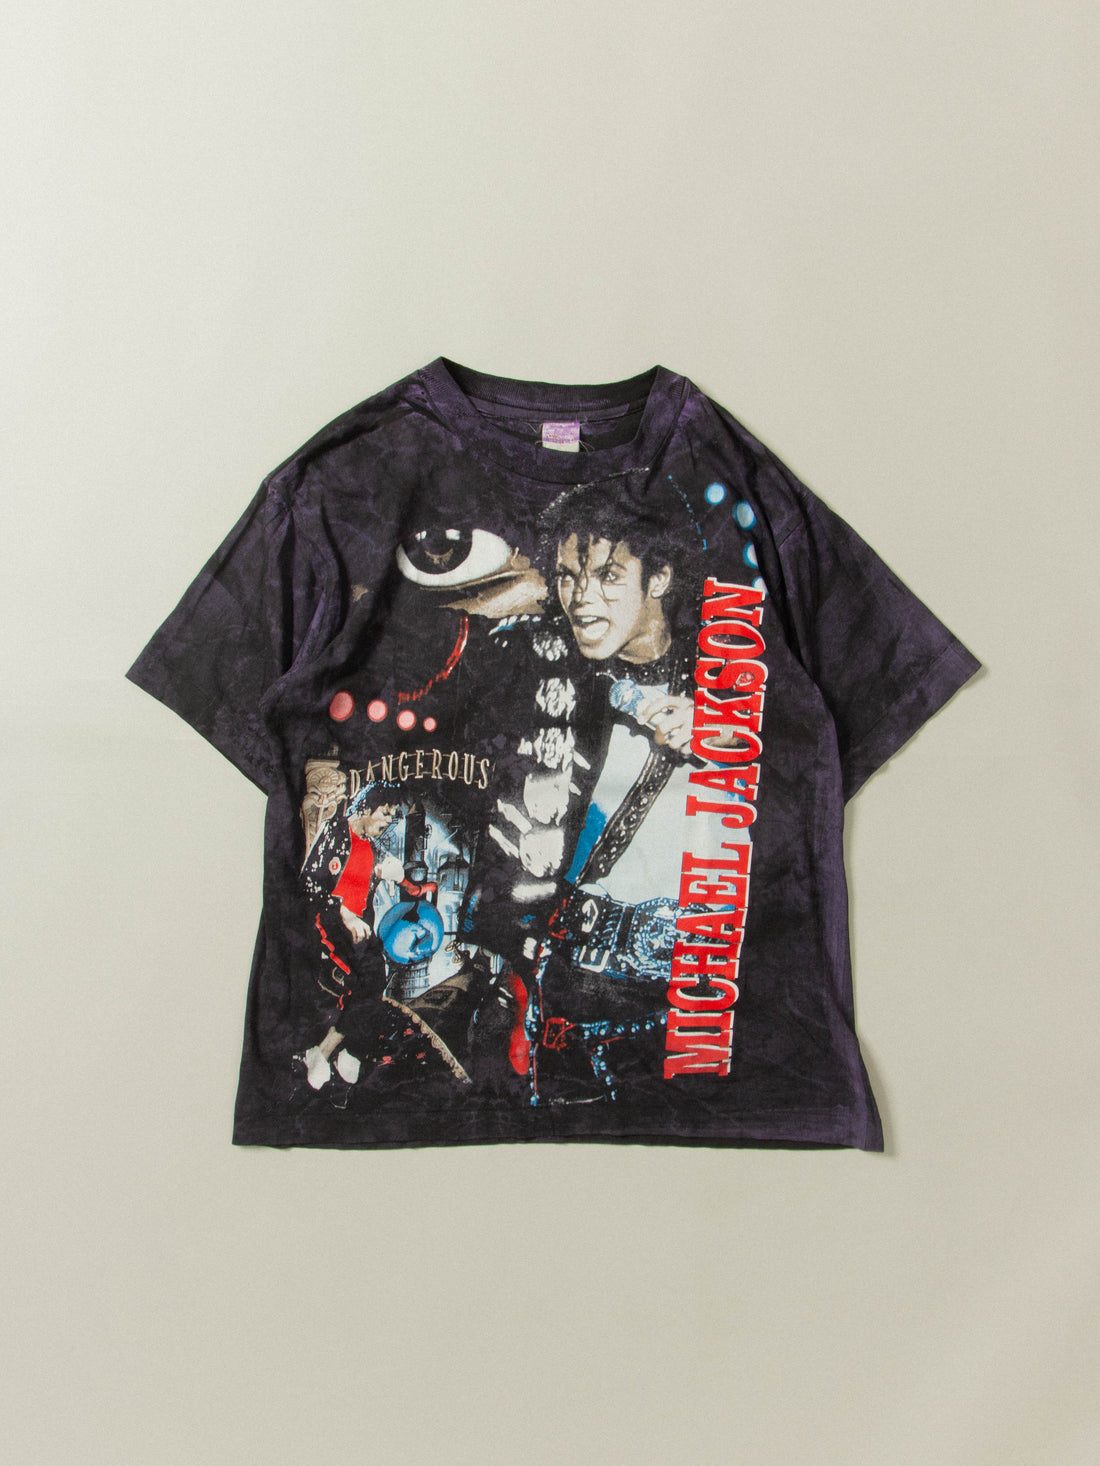 1992 Vintage Michael Jackson Dangerous Tee Shirt 